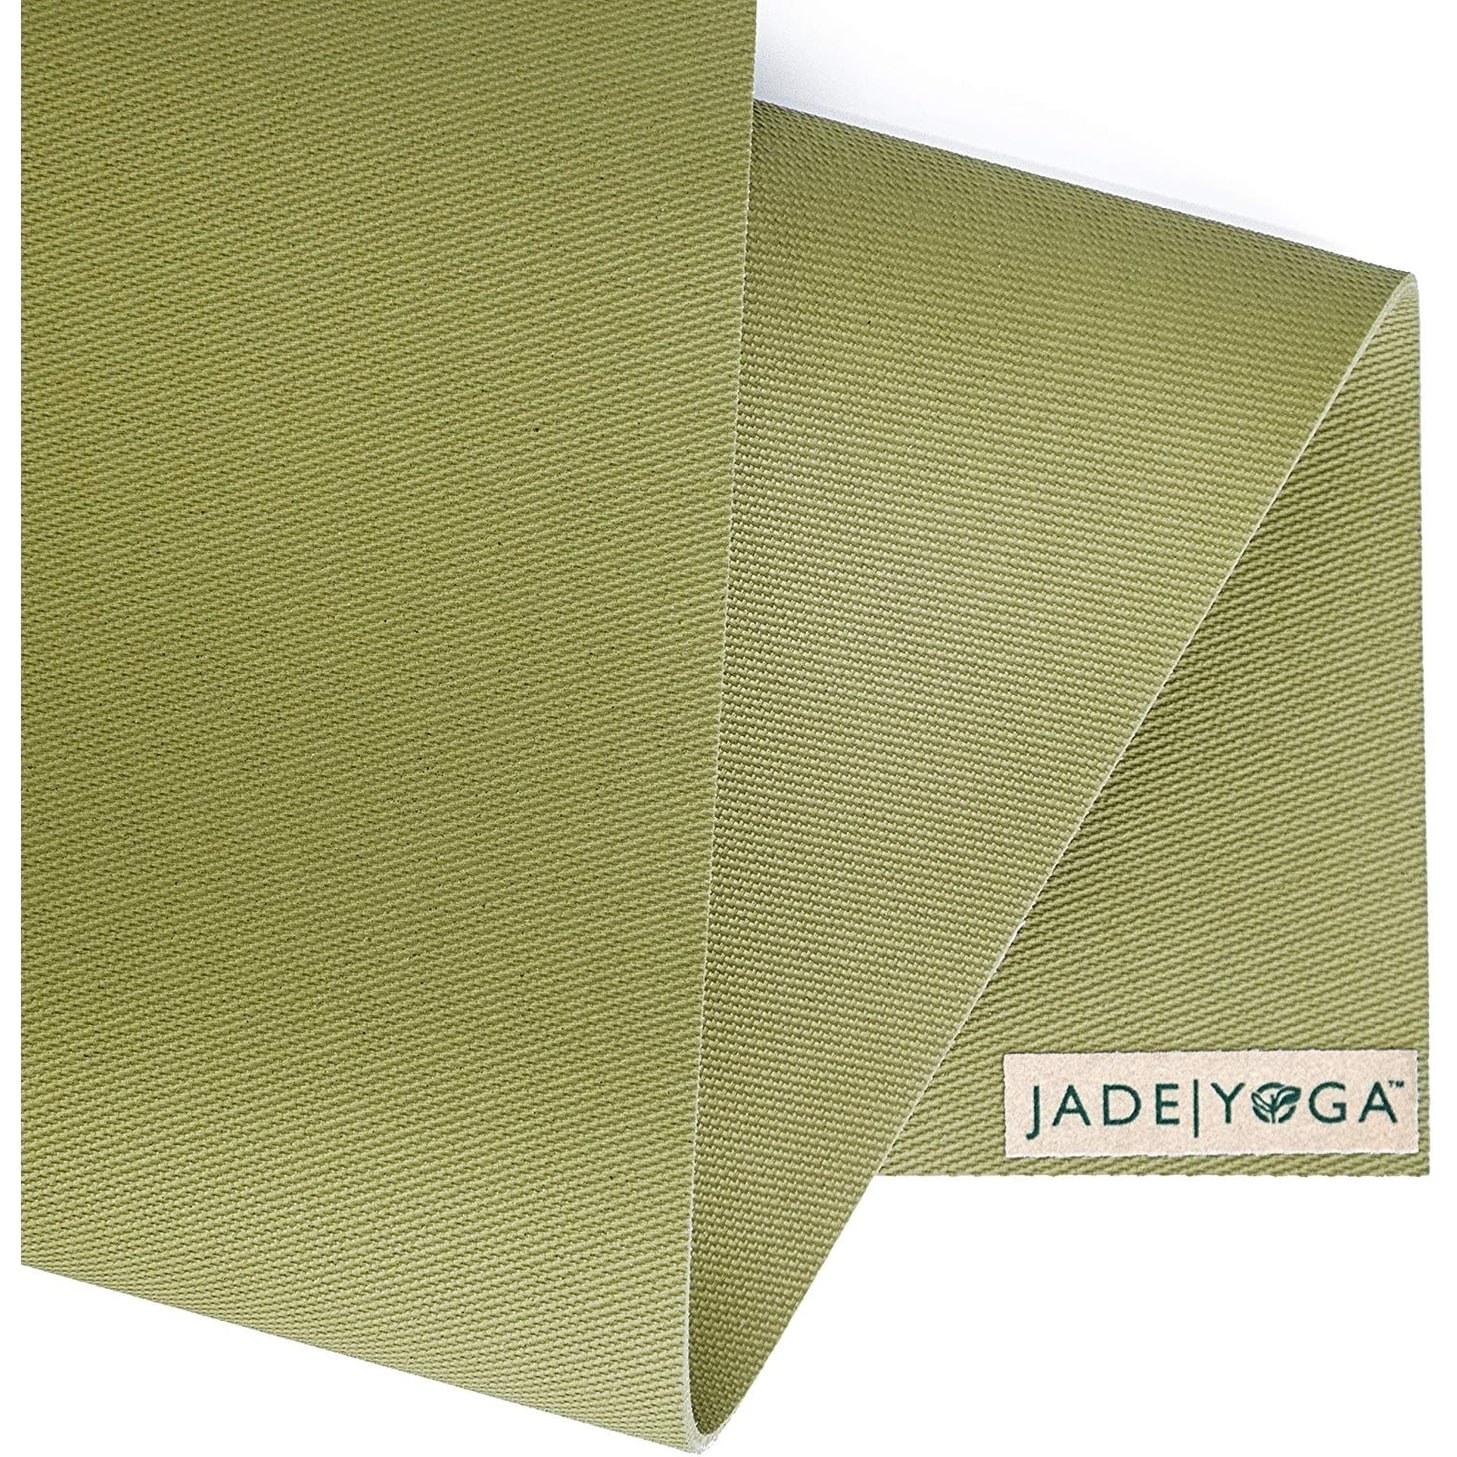 Yoga Direct 4 inch Olive Green Foam Yoga Block